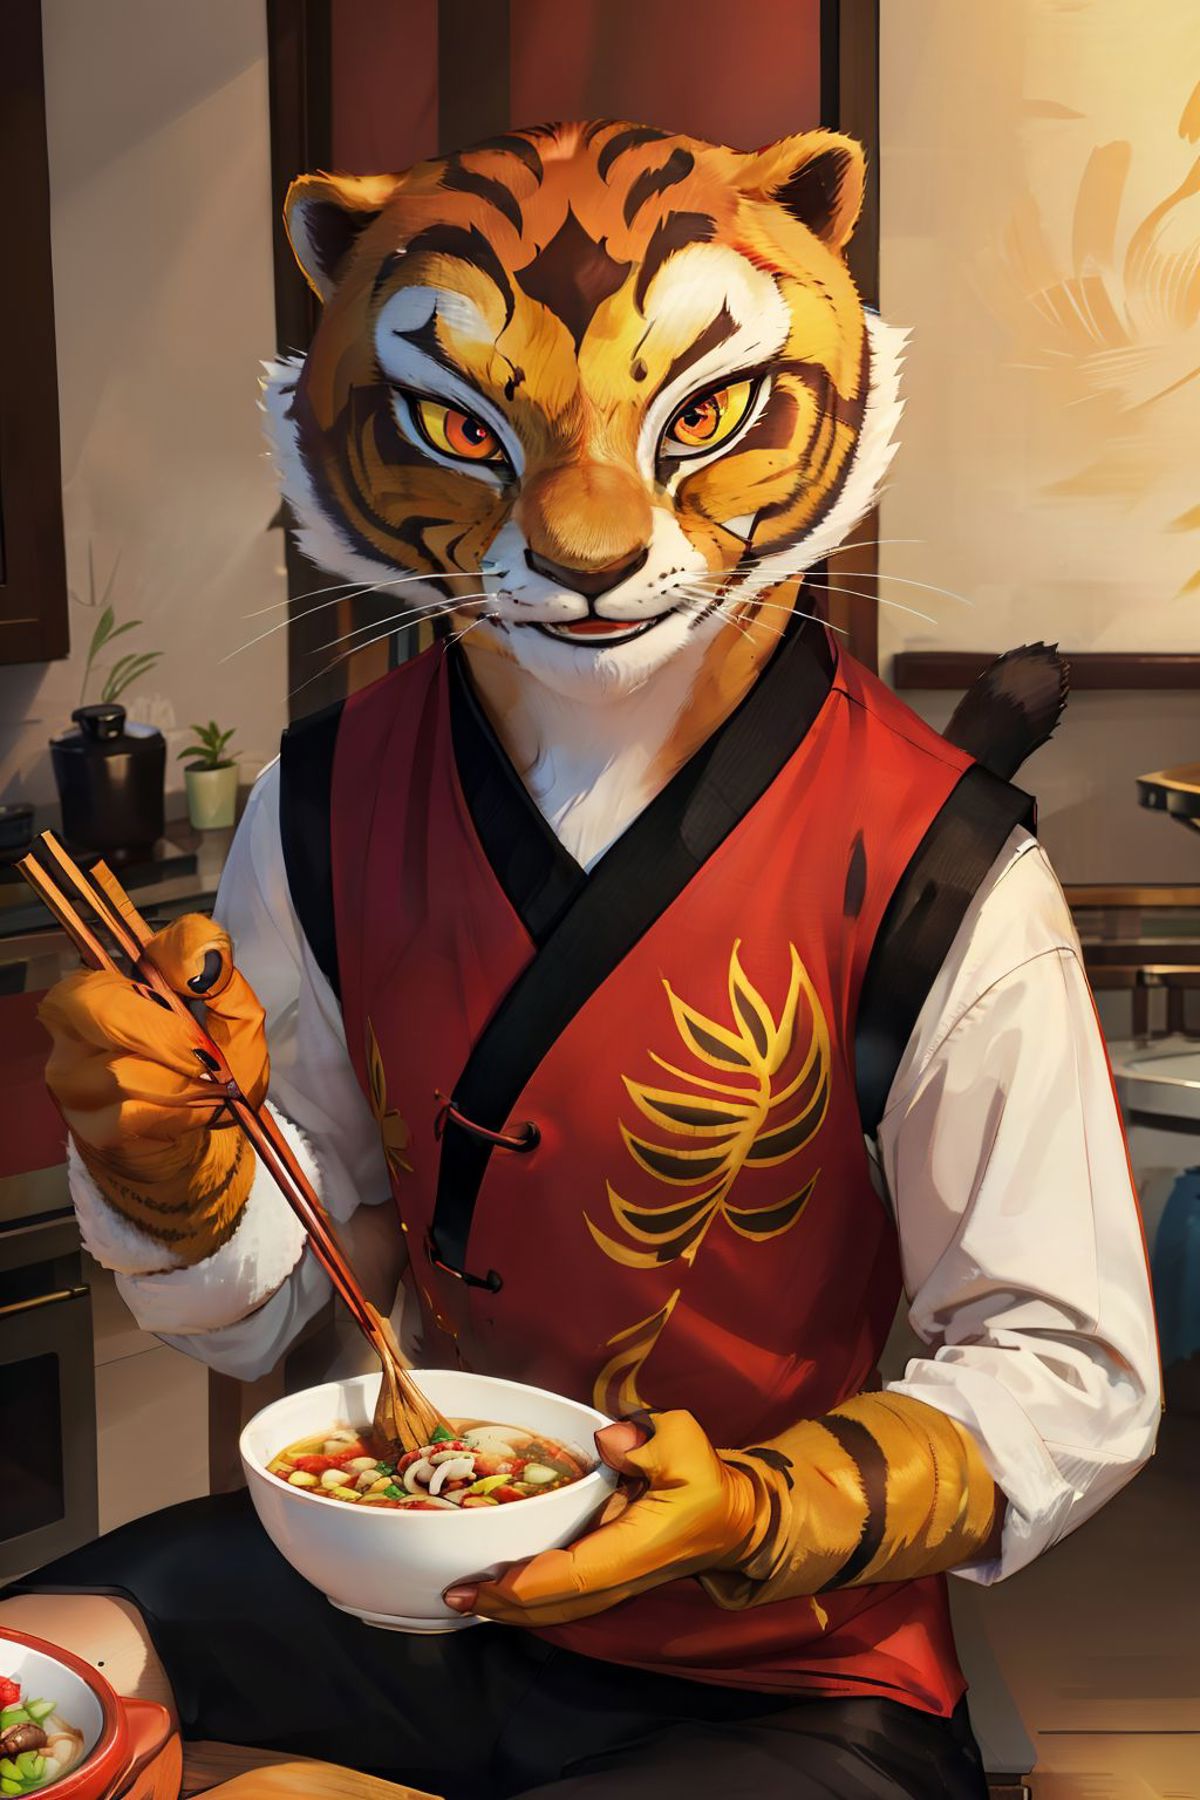 Master Tigress [Kung Fu Panda] image by wikkitikki